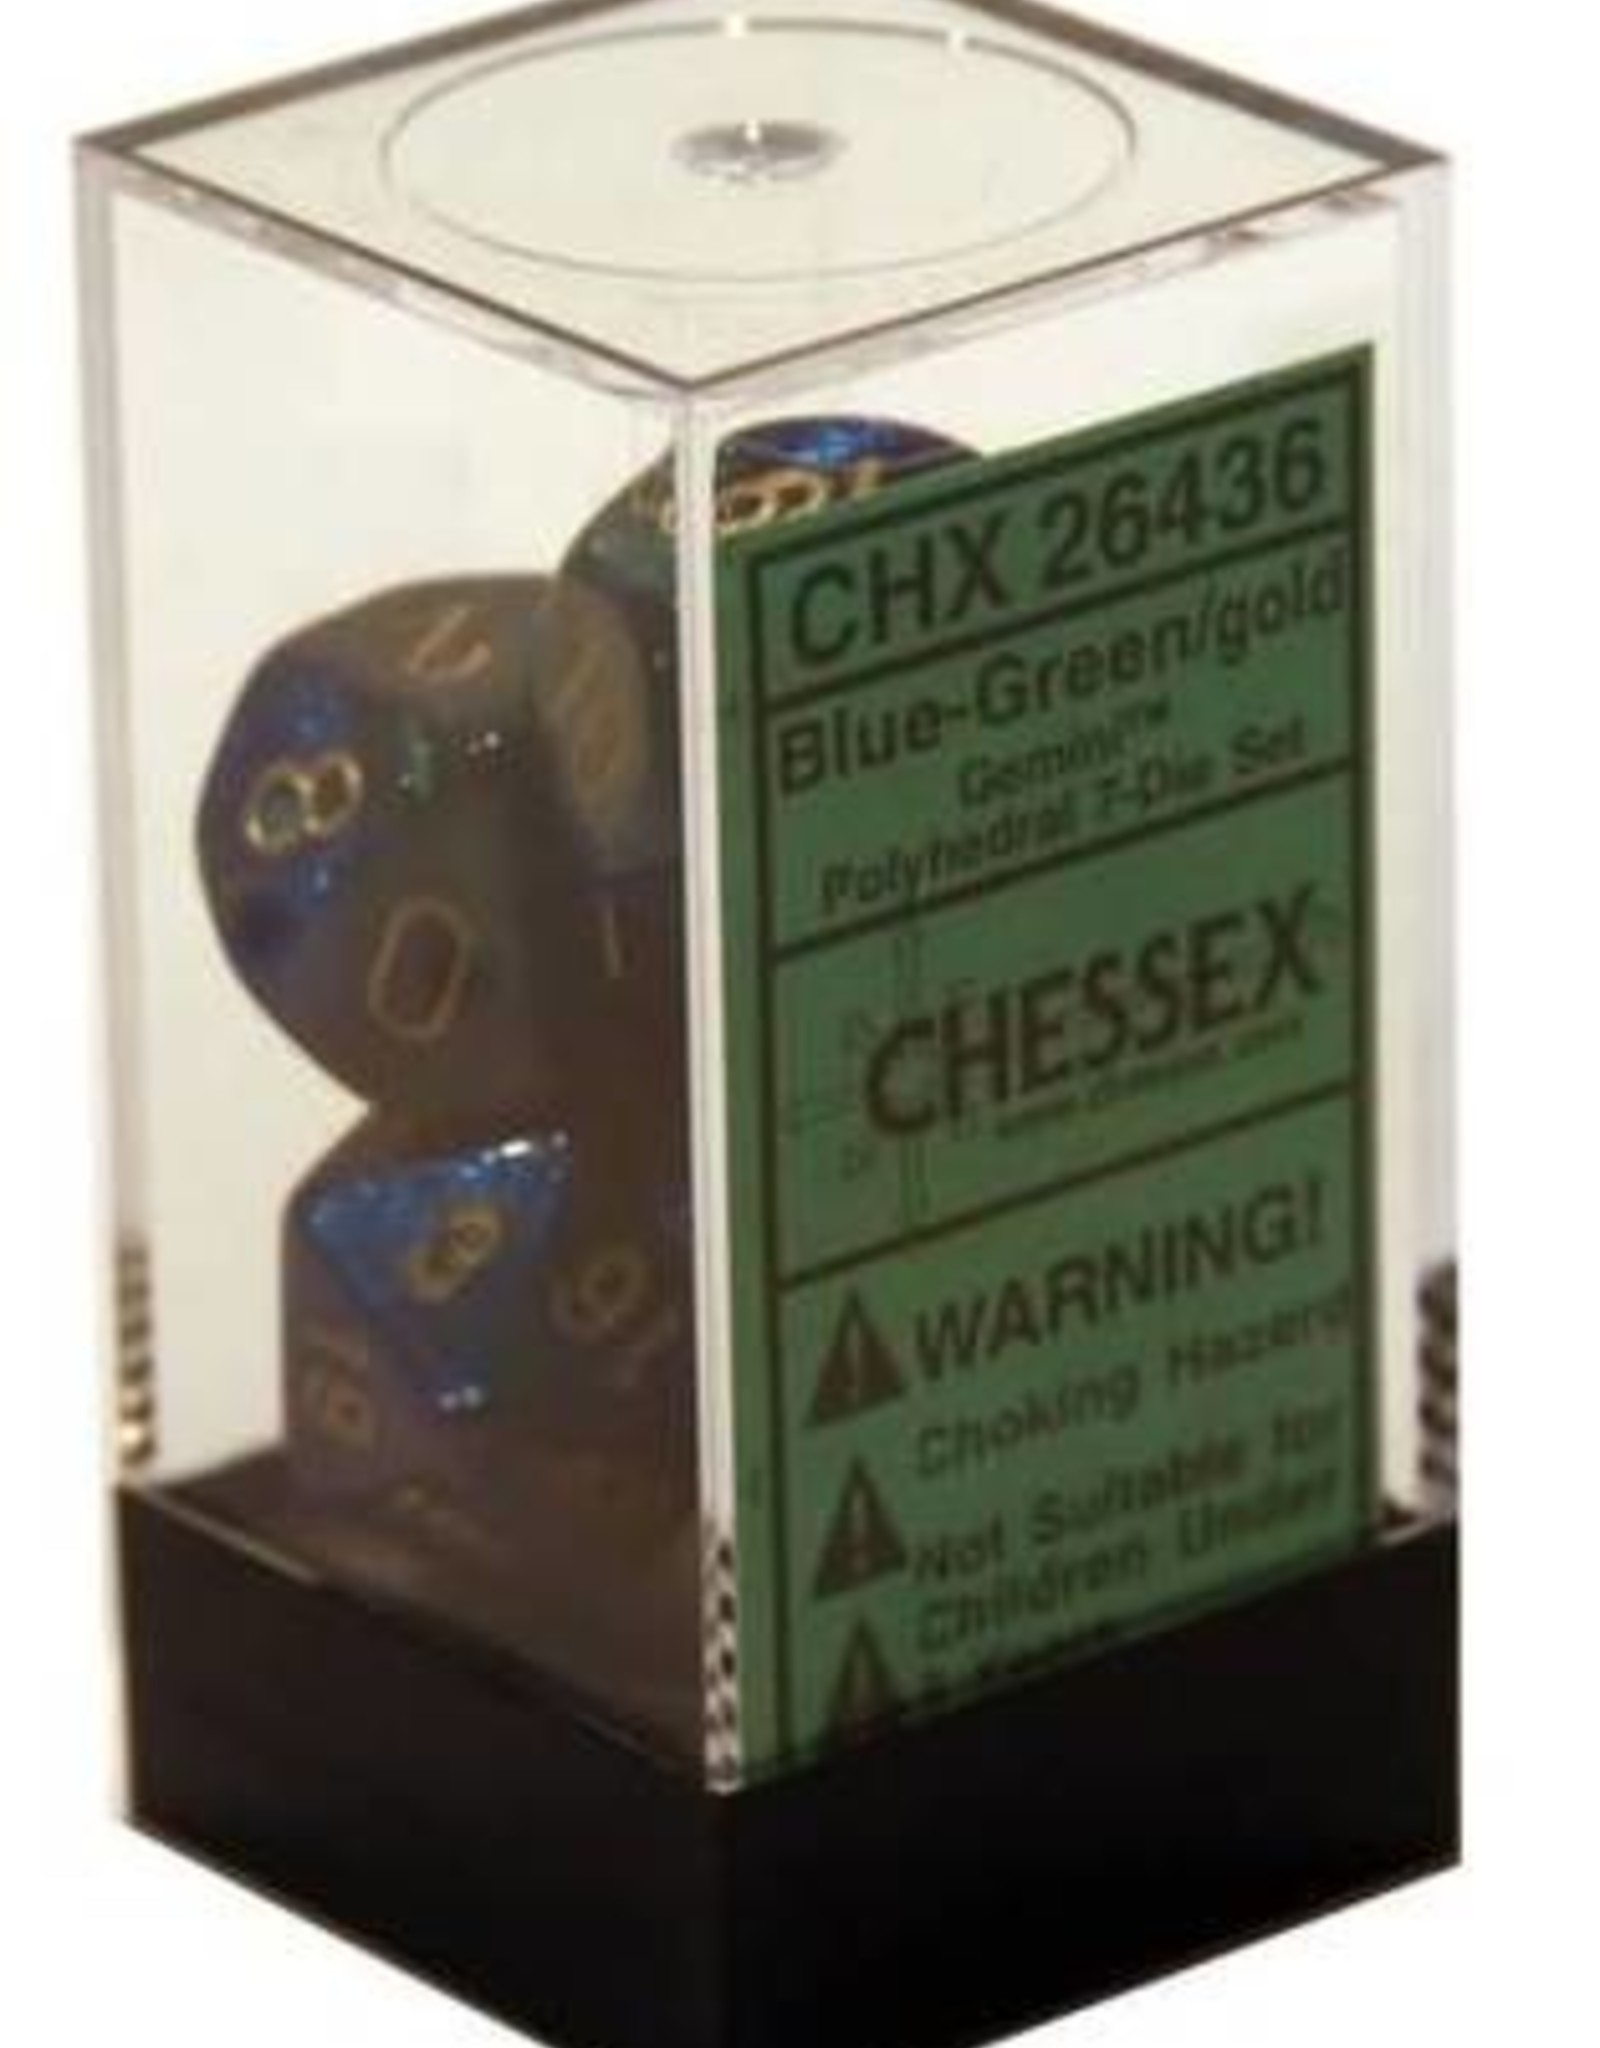 Chessex 7Ct Dice Set CHX26436 Gemini Blue-Green/Gold